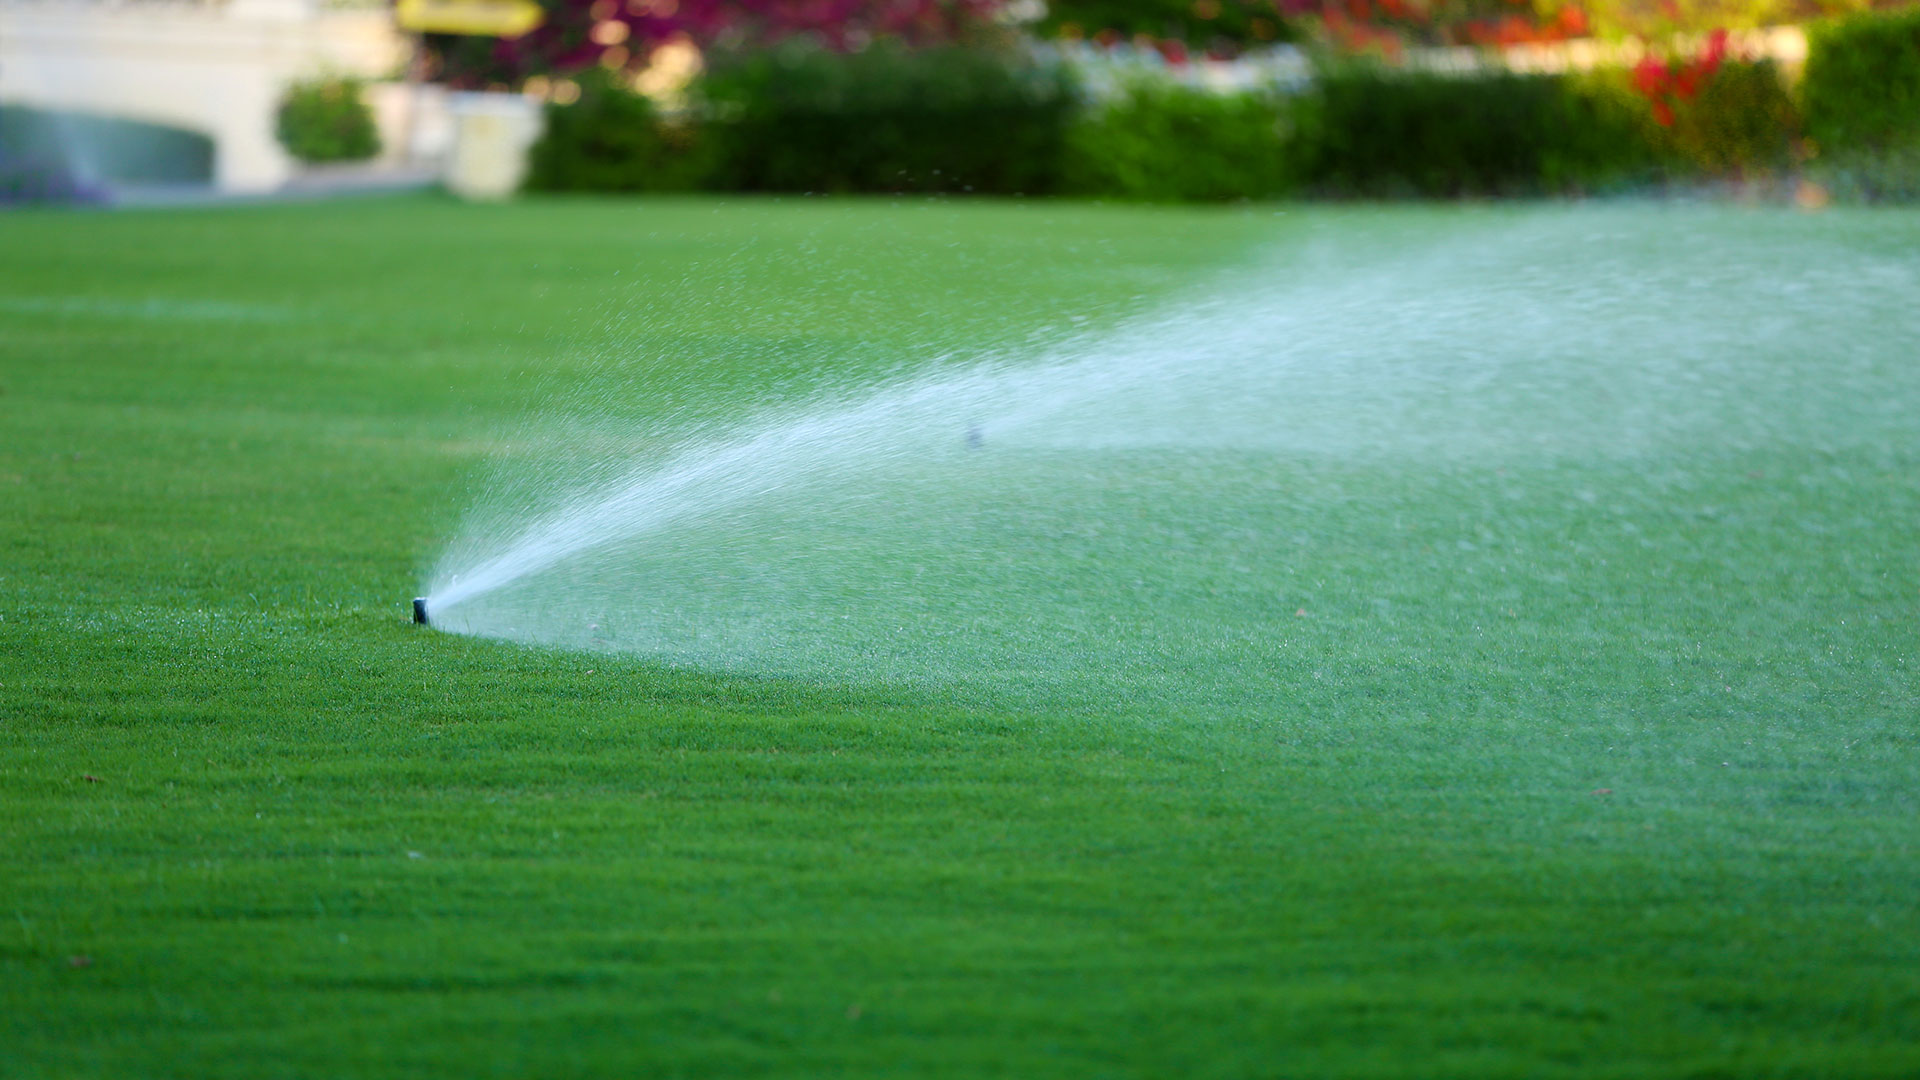 Irrigation sprinklers watering a green healthy lawn near Matthews, NC.